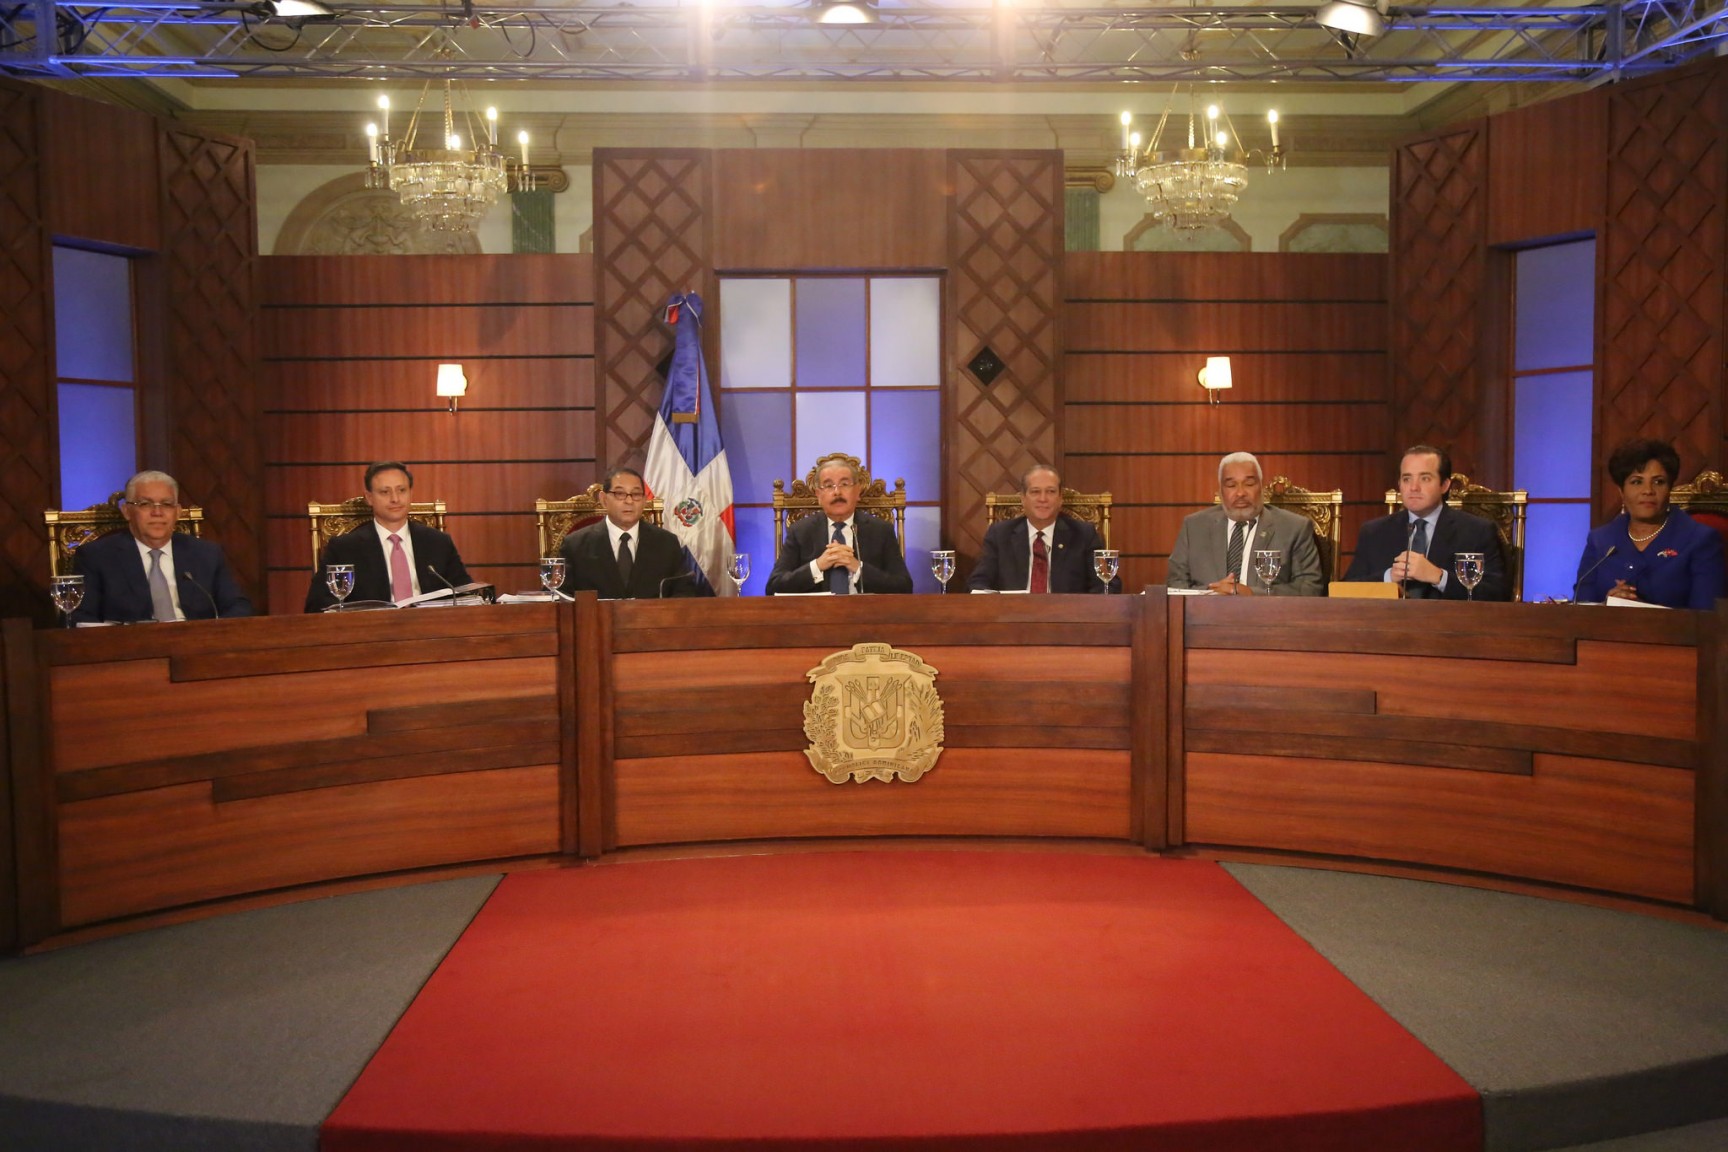 REPÚBLICA DOMINICANA: Consejo Nacional de la Magistratura entrevista a primeros 14 candidatos a jueces del Tribunal Constitucional